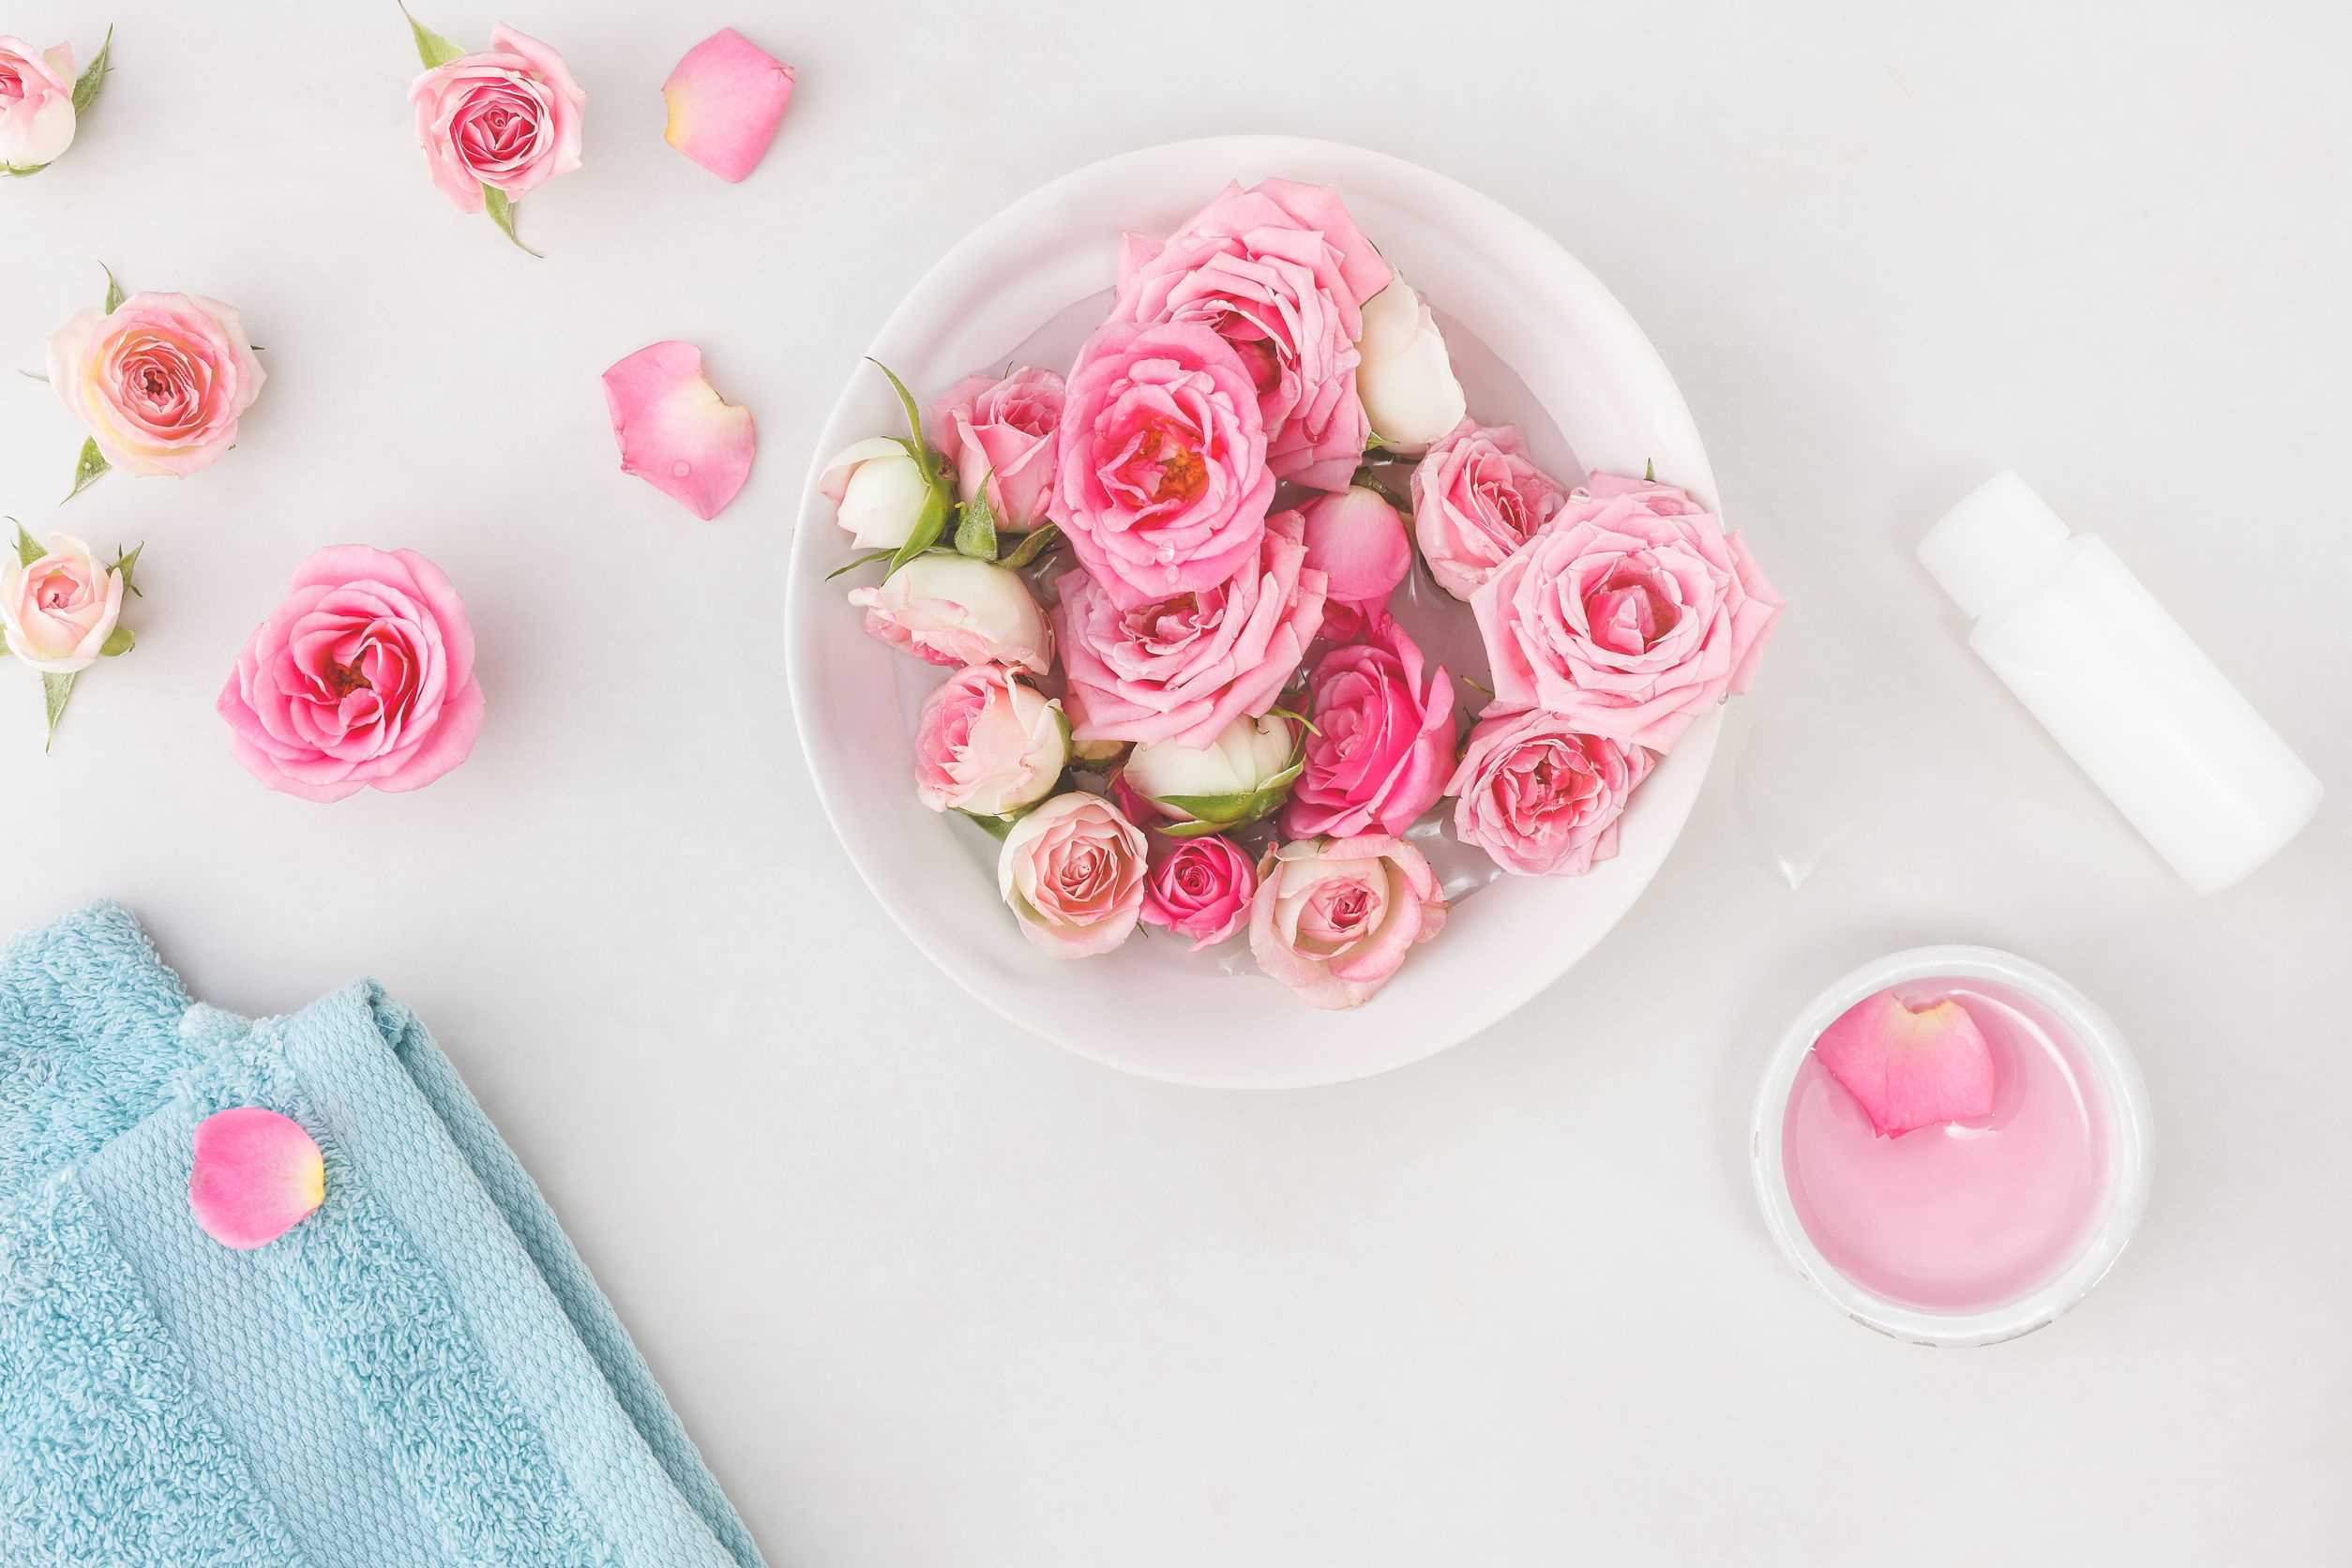 How to make rose water at home - Baremetics